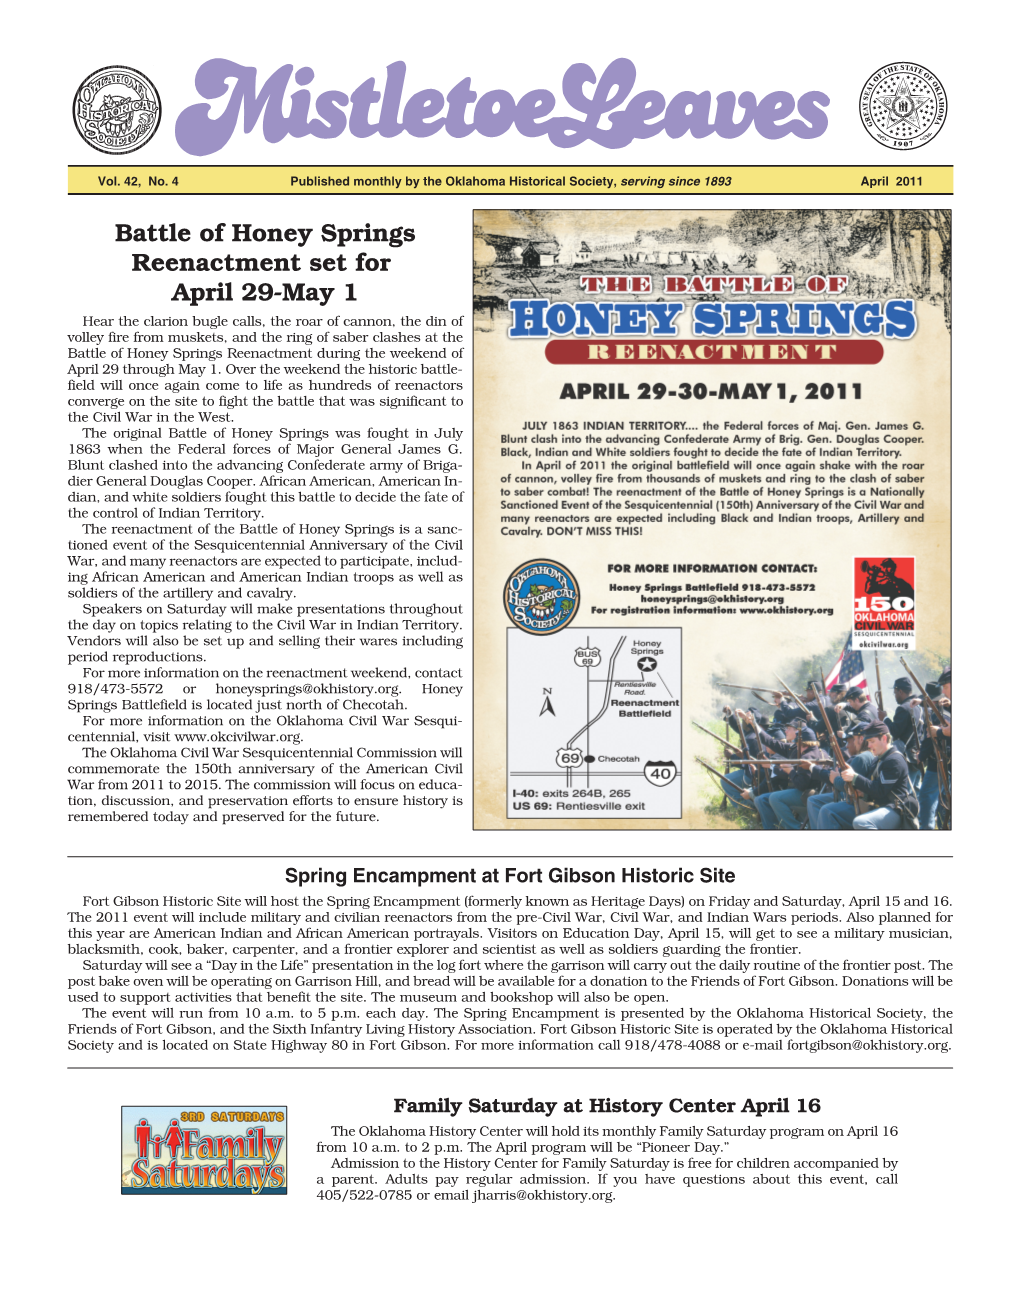 Battle of Honey Springs Reenactment Set for April 29-May 1